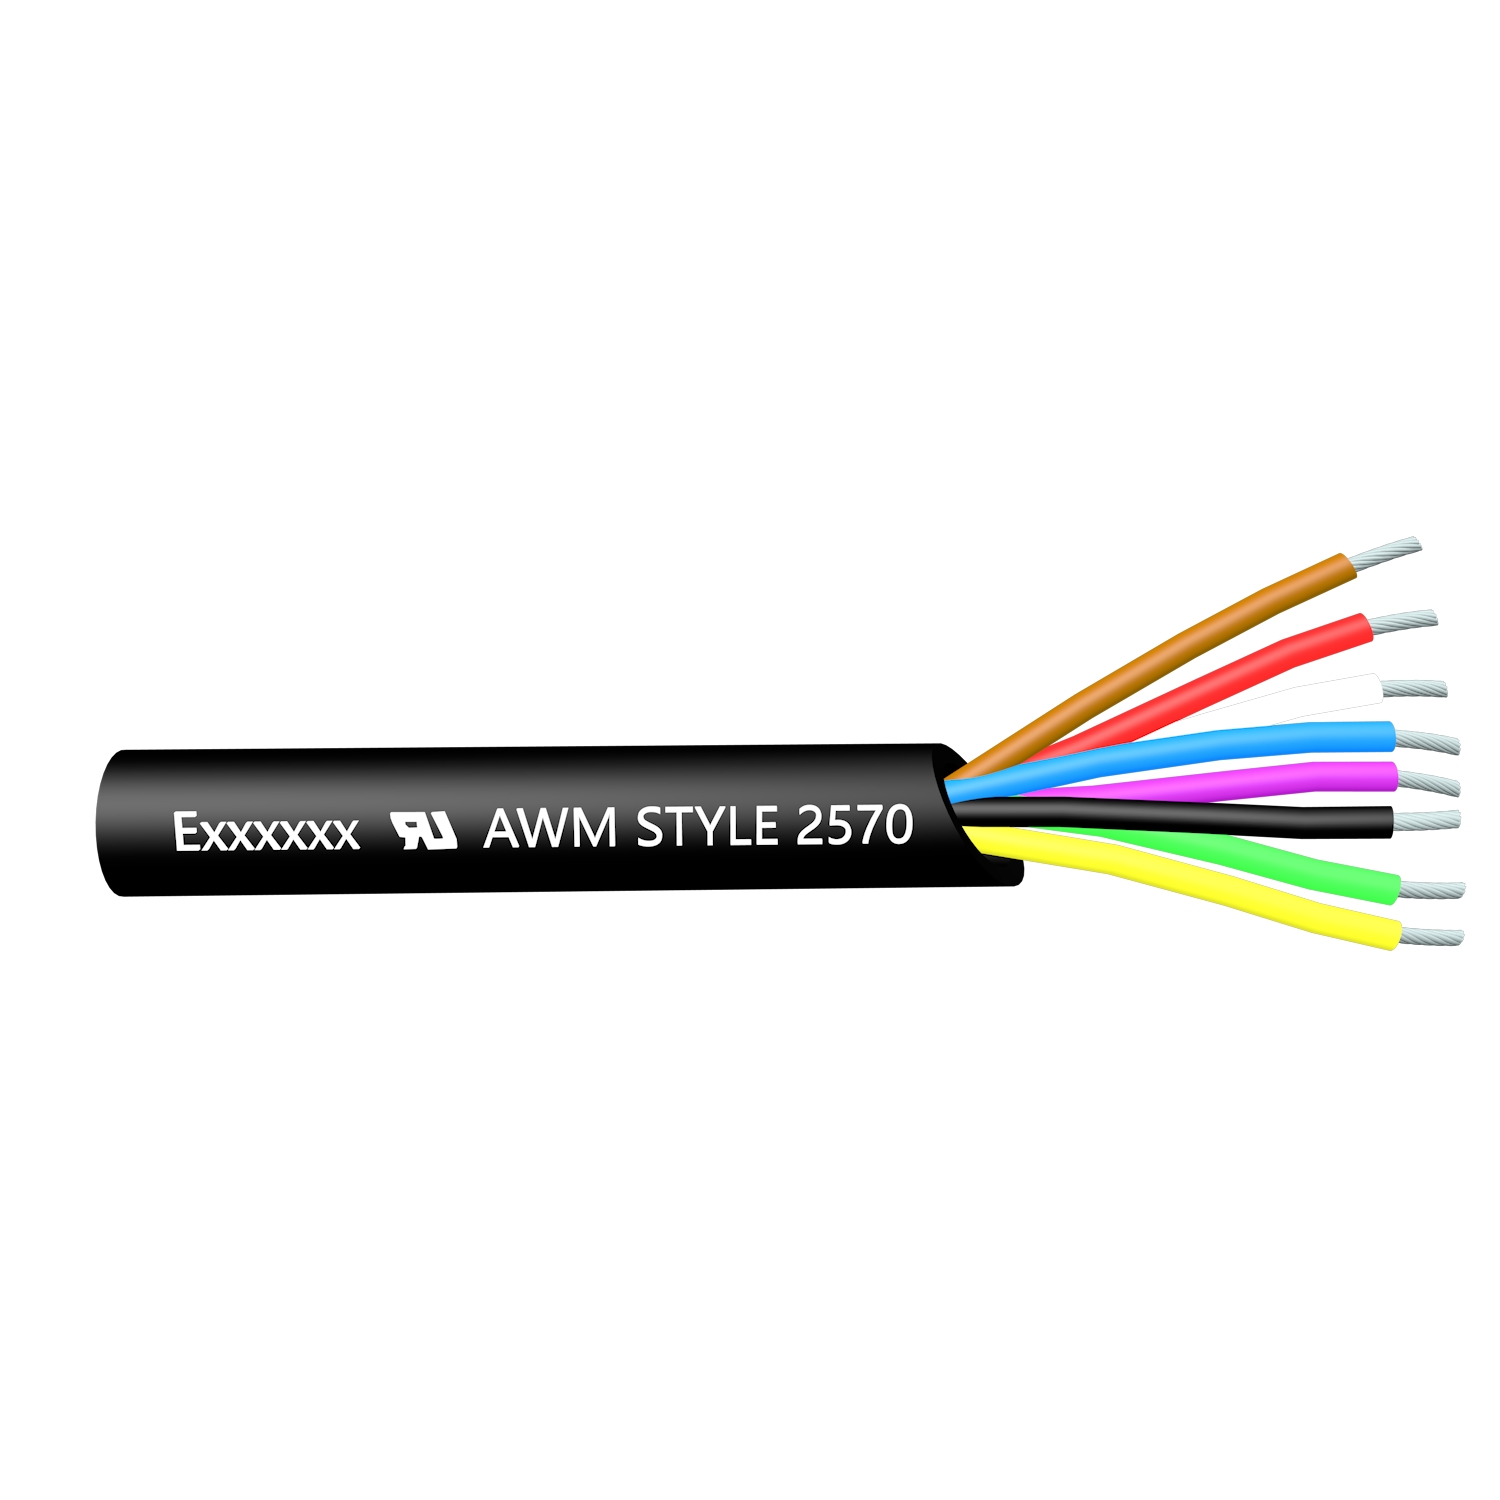 Cable de núcleos múltiples UL AWM 2570 600V para cableado de electrodomésticos